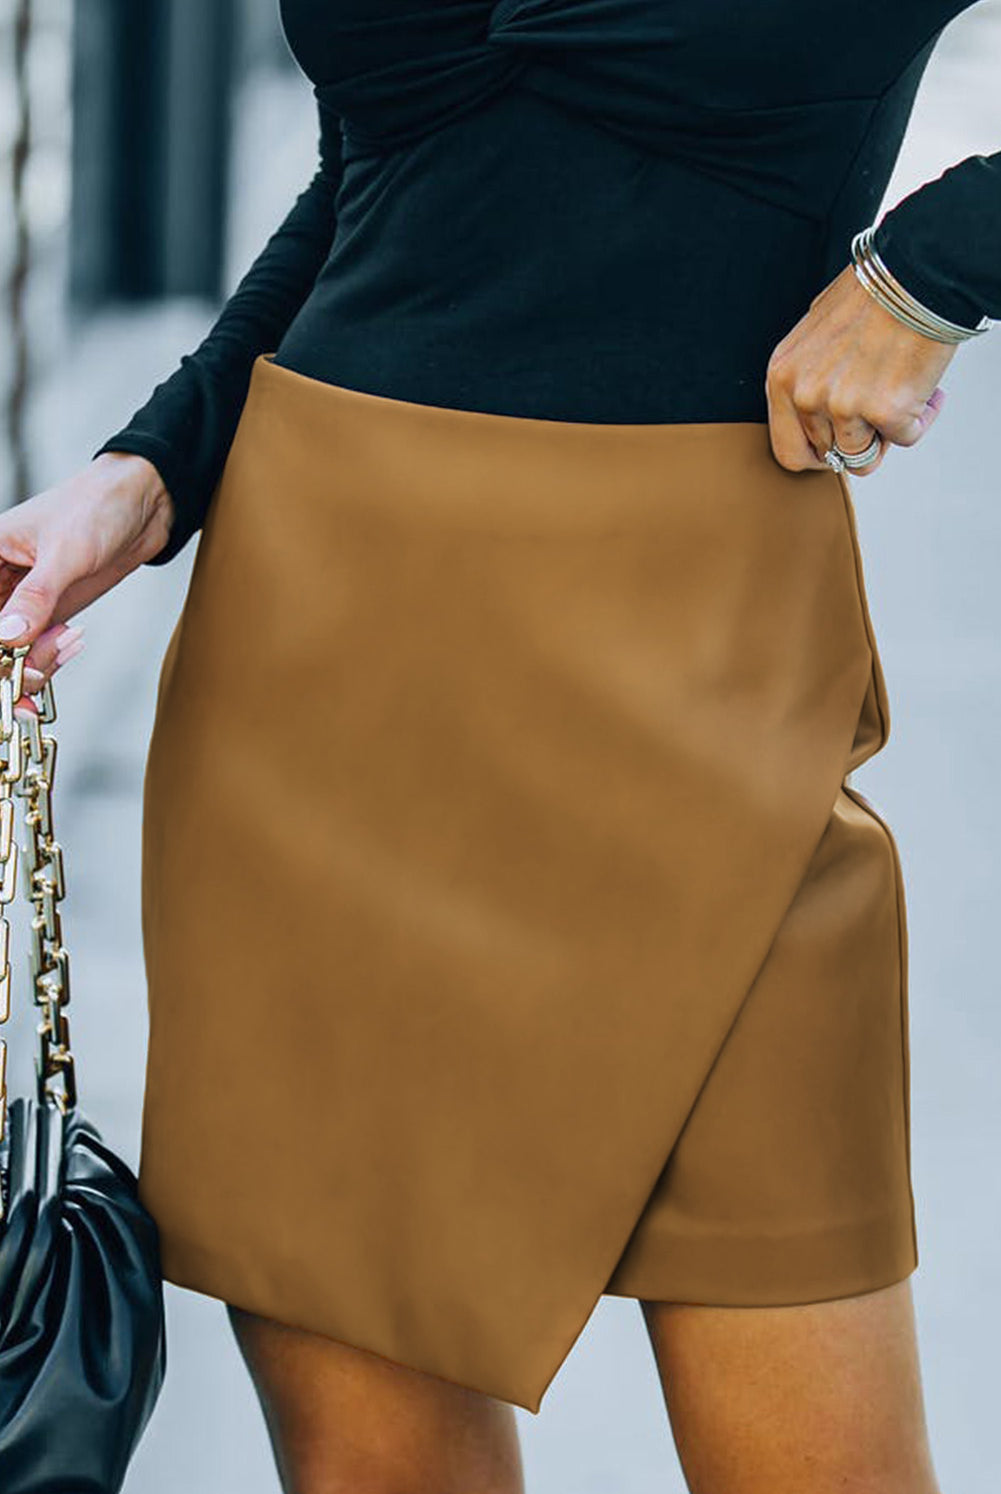 Sienna Double Take Asymmetrical PU Leather Mini Skirt Mini Skirts